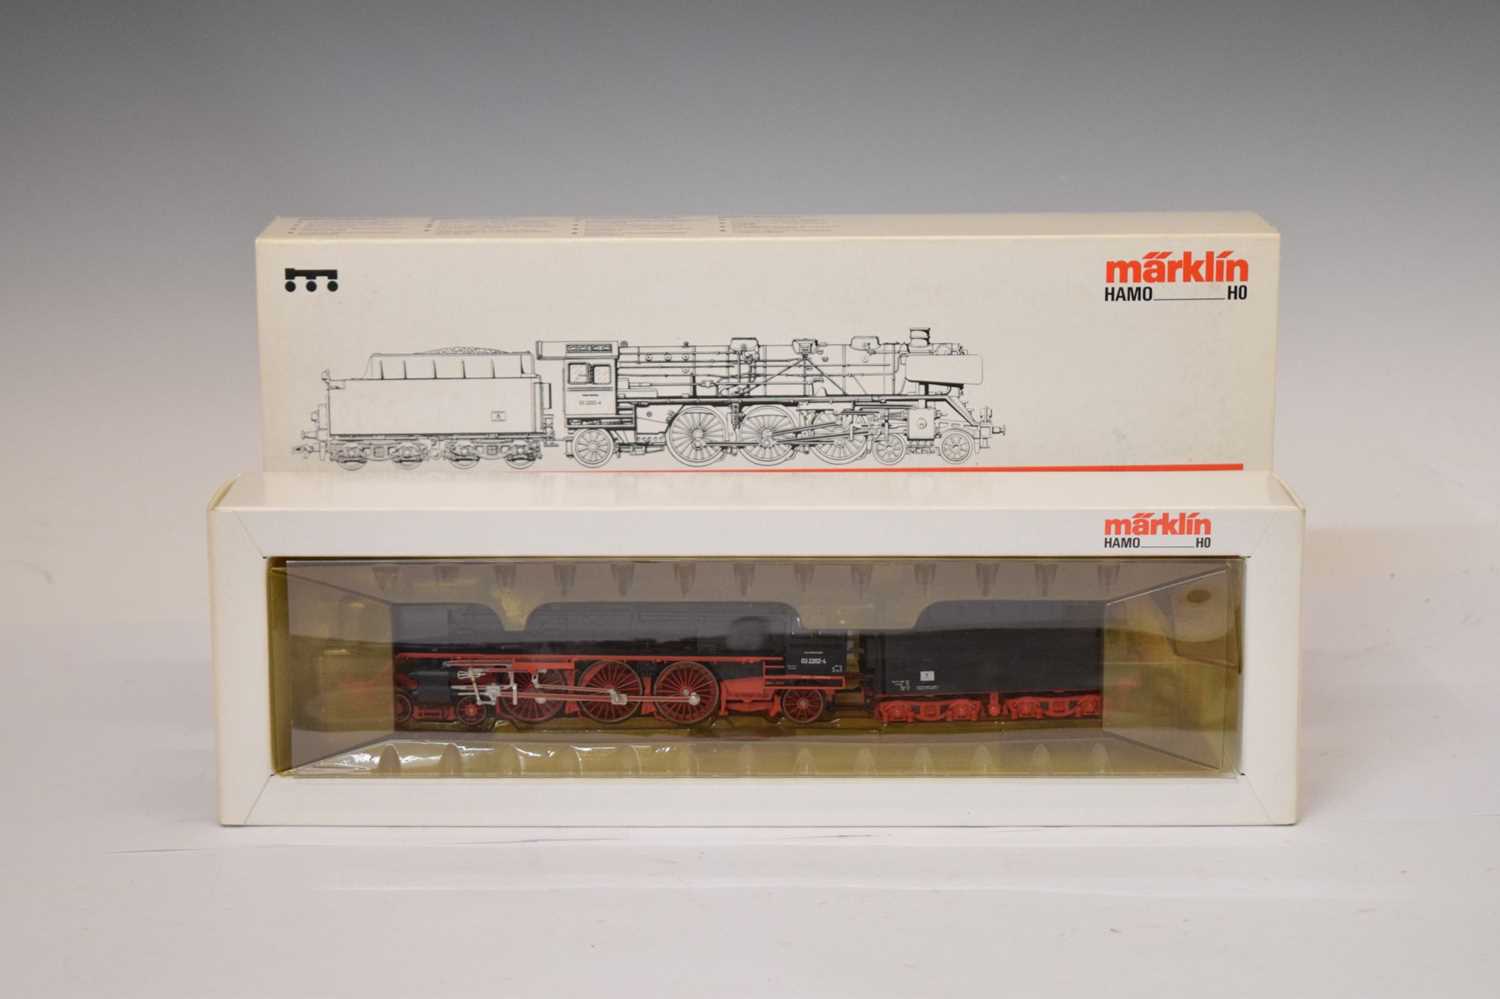 Märklin - Boxed H0/00 gauge BR 03 railway trainset locomotive and tender - Image 2 of 7